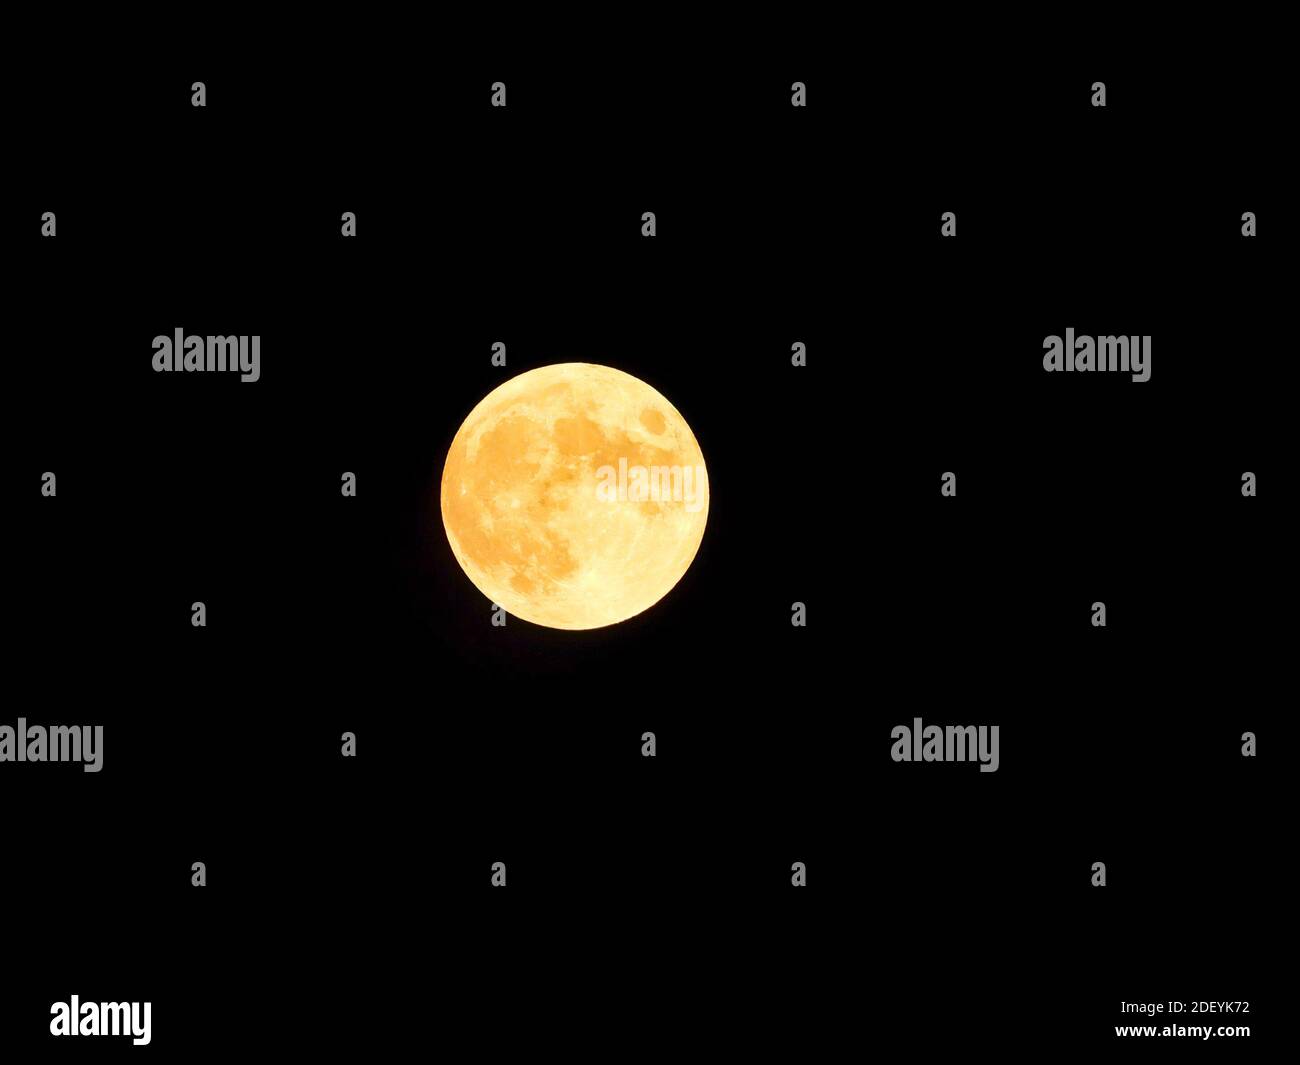 Full Moon Lights Up Dark Sky with Yellow Moon Light in Closeup of Full Moon Astronomy Stock Photo